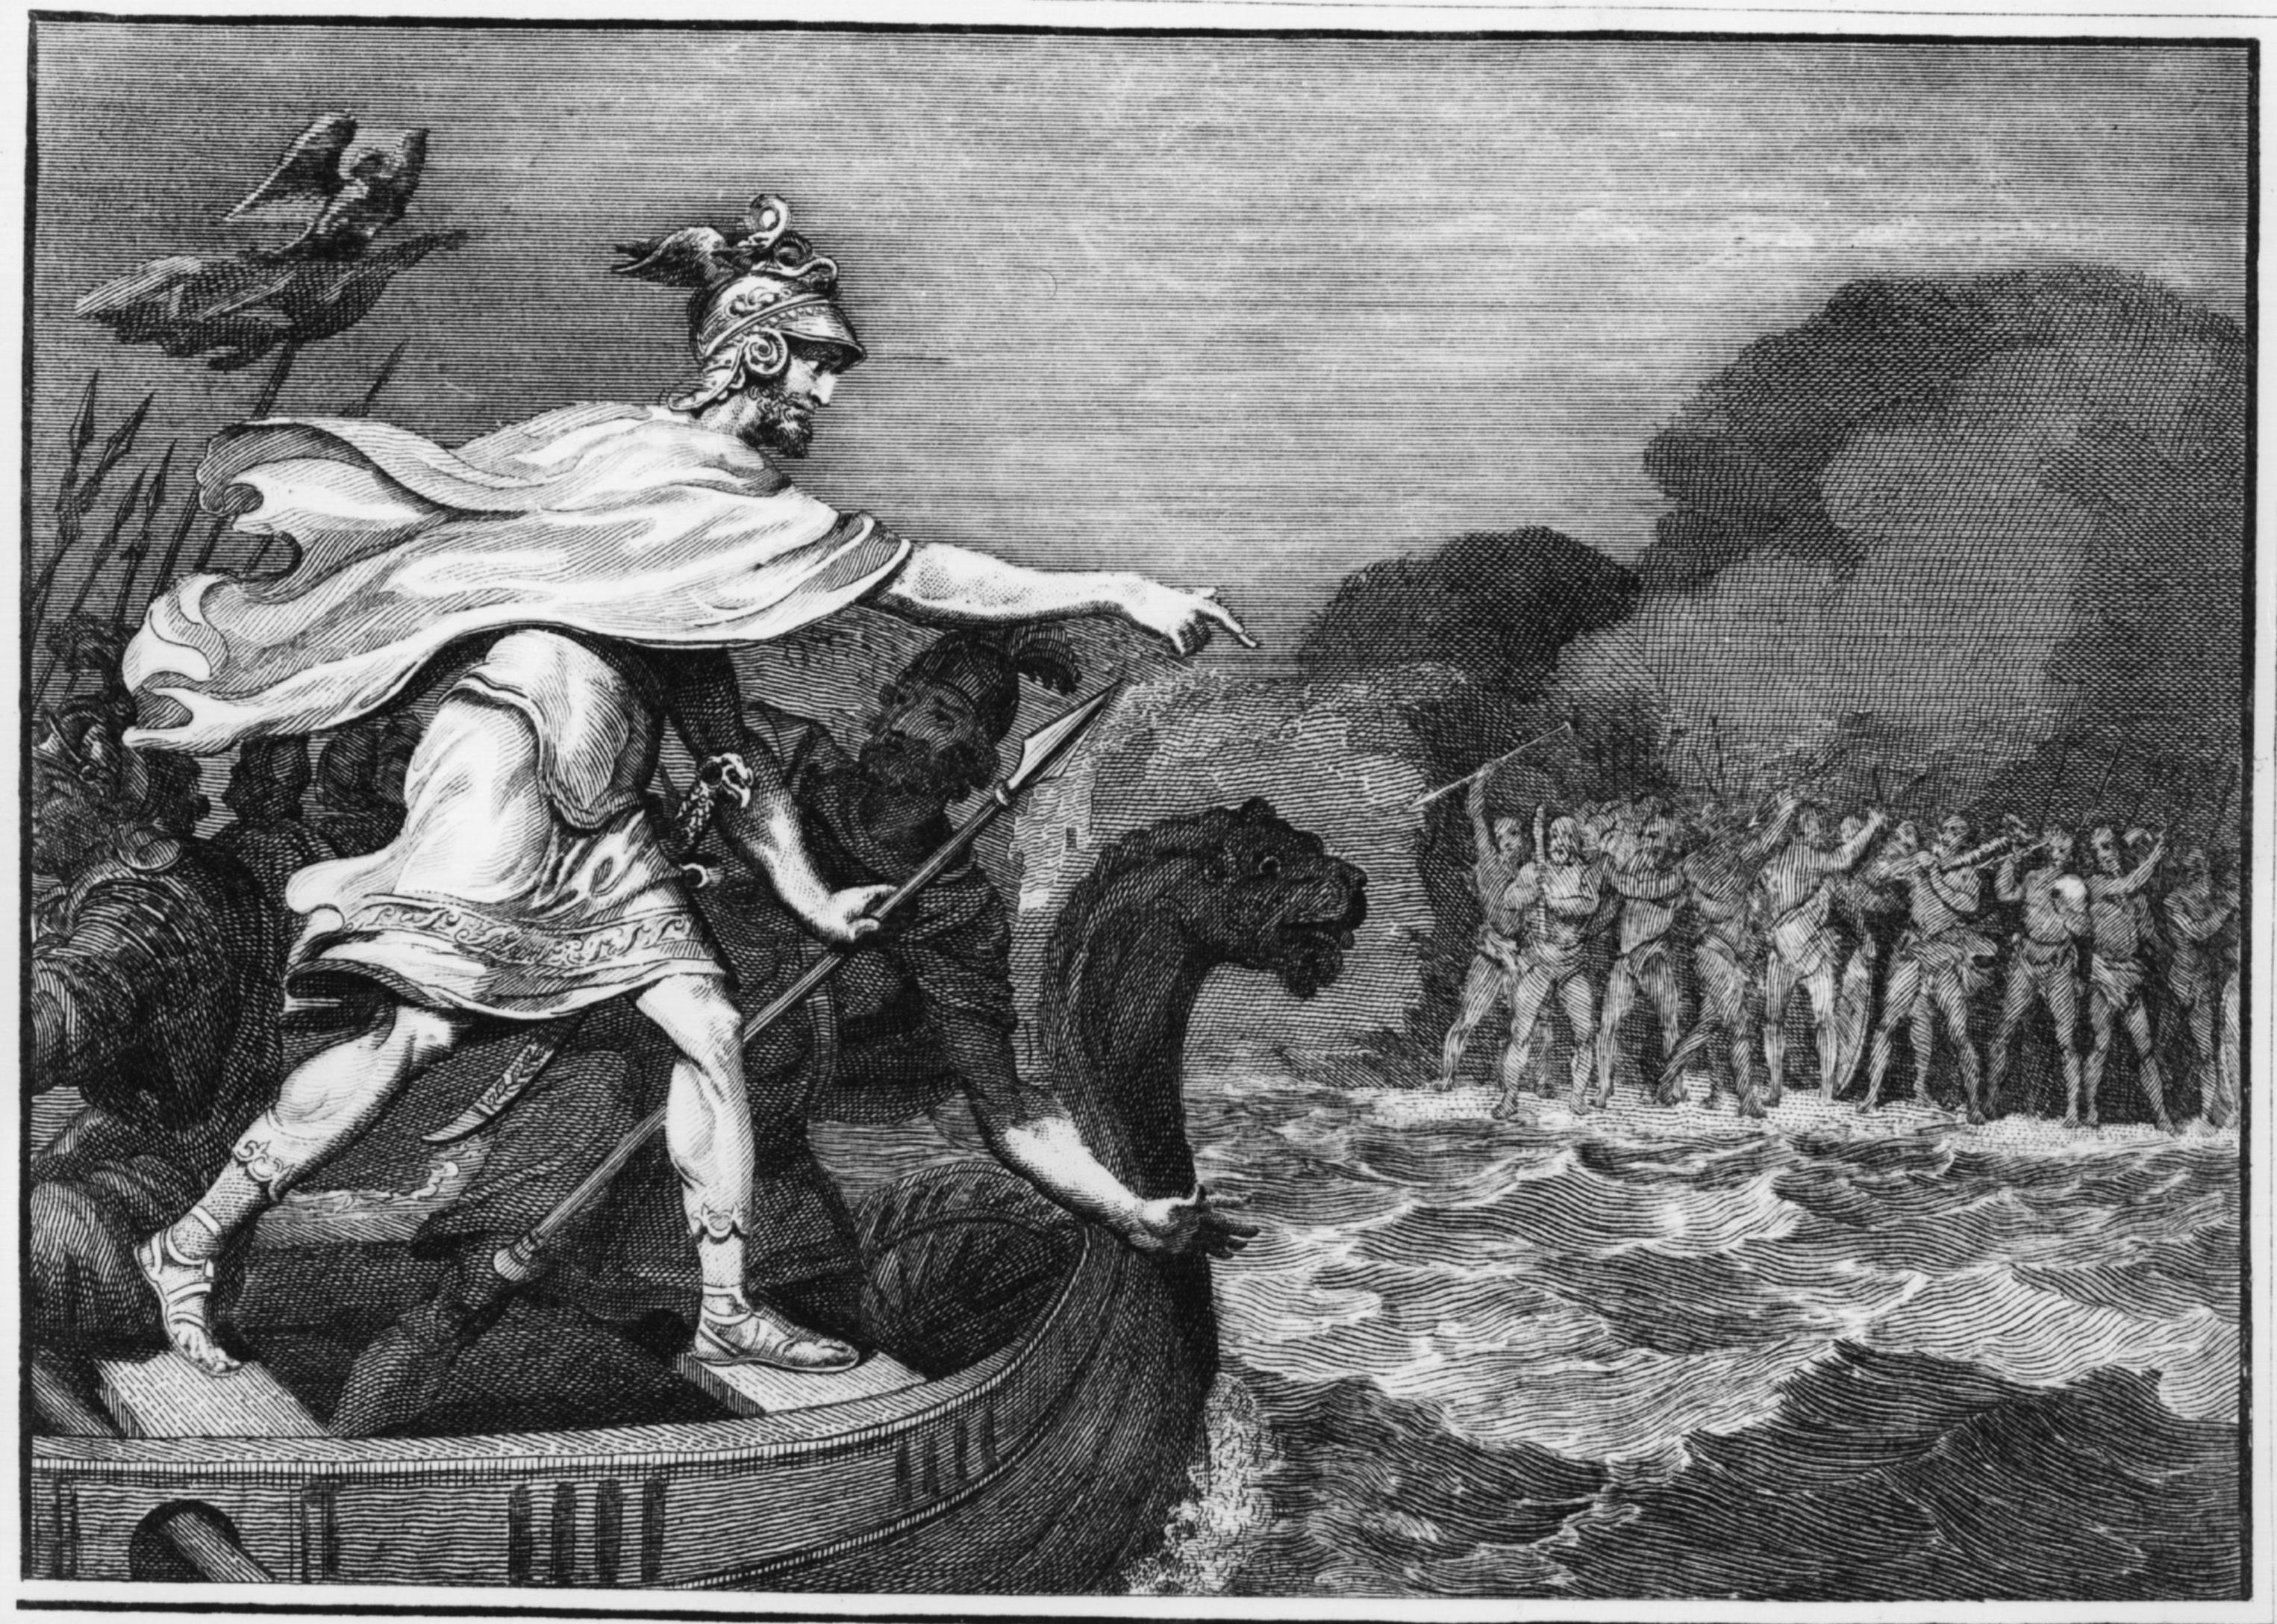 Illustration of Julius Caesar as he lands his craft during his invasion on Britain.